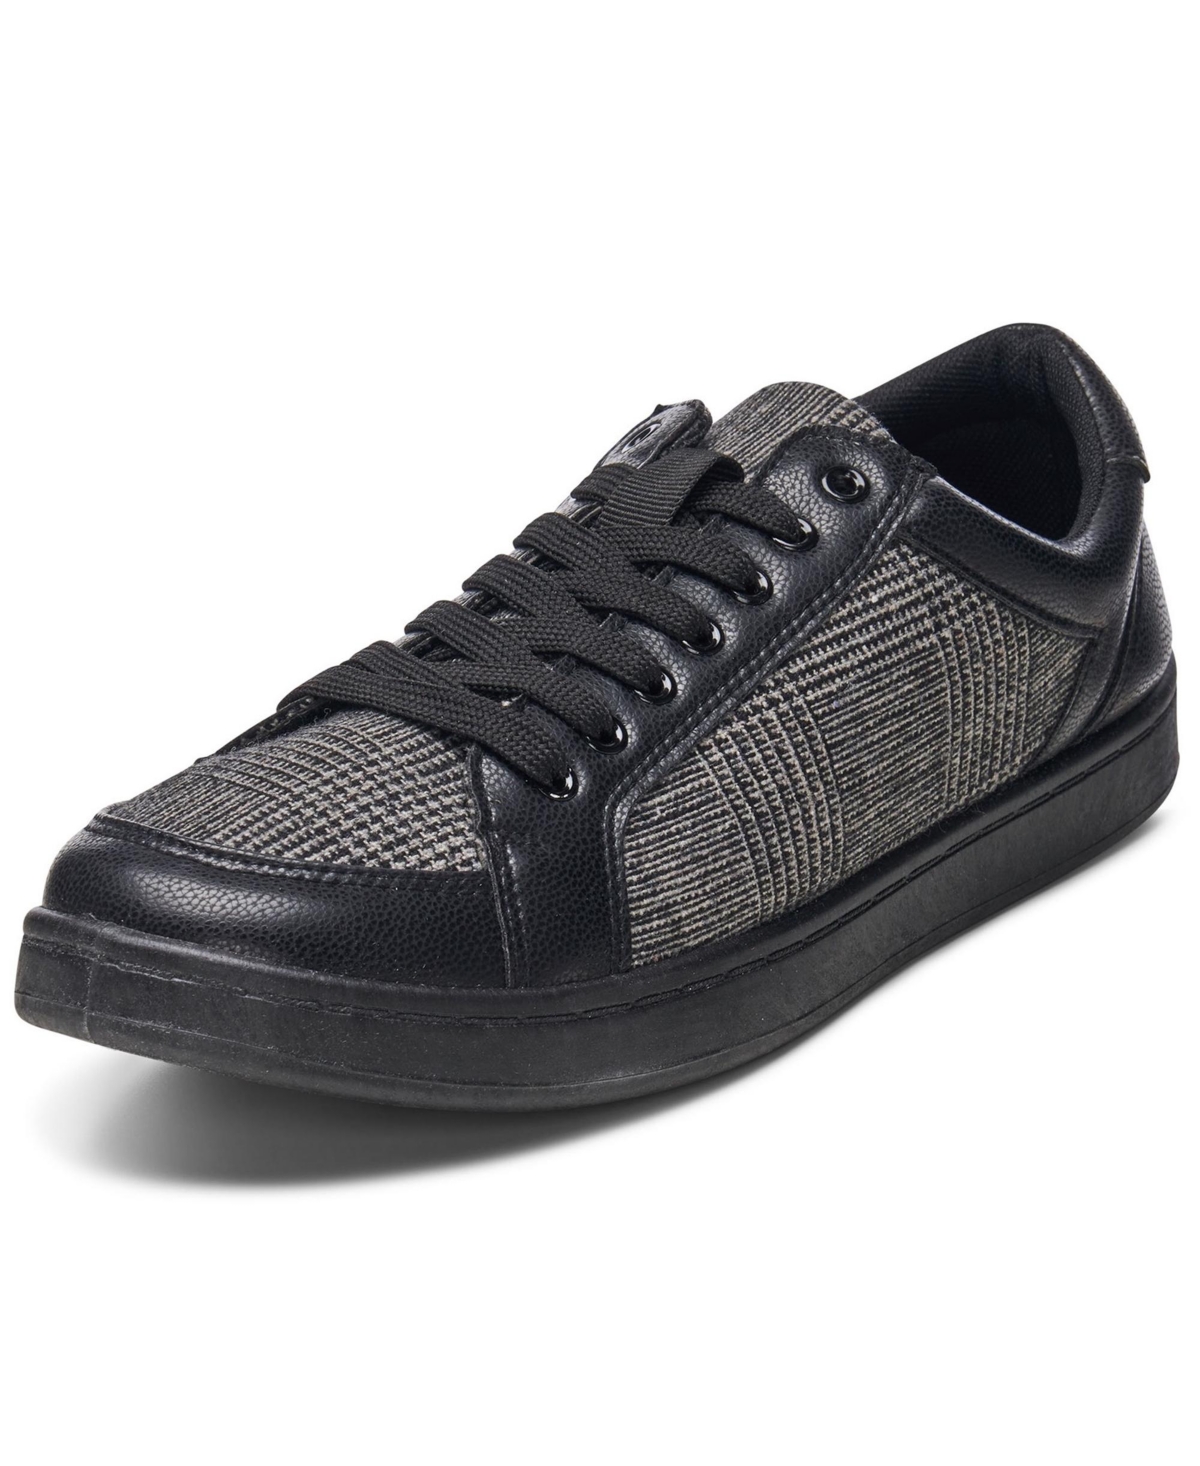 David Mens Fashion Sneakers Lace Up Low Top Retro Tennis Shoes - Black plaid